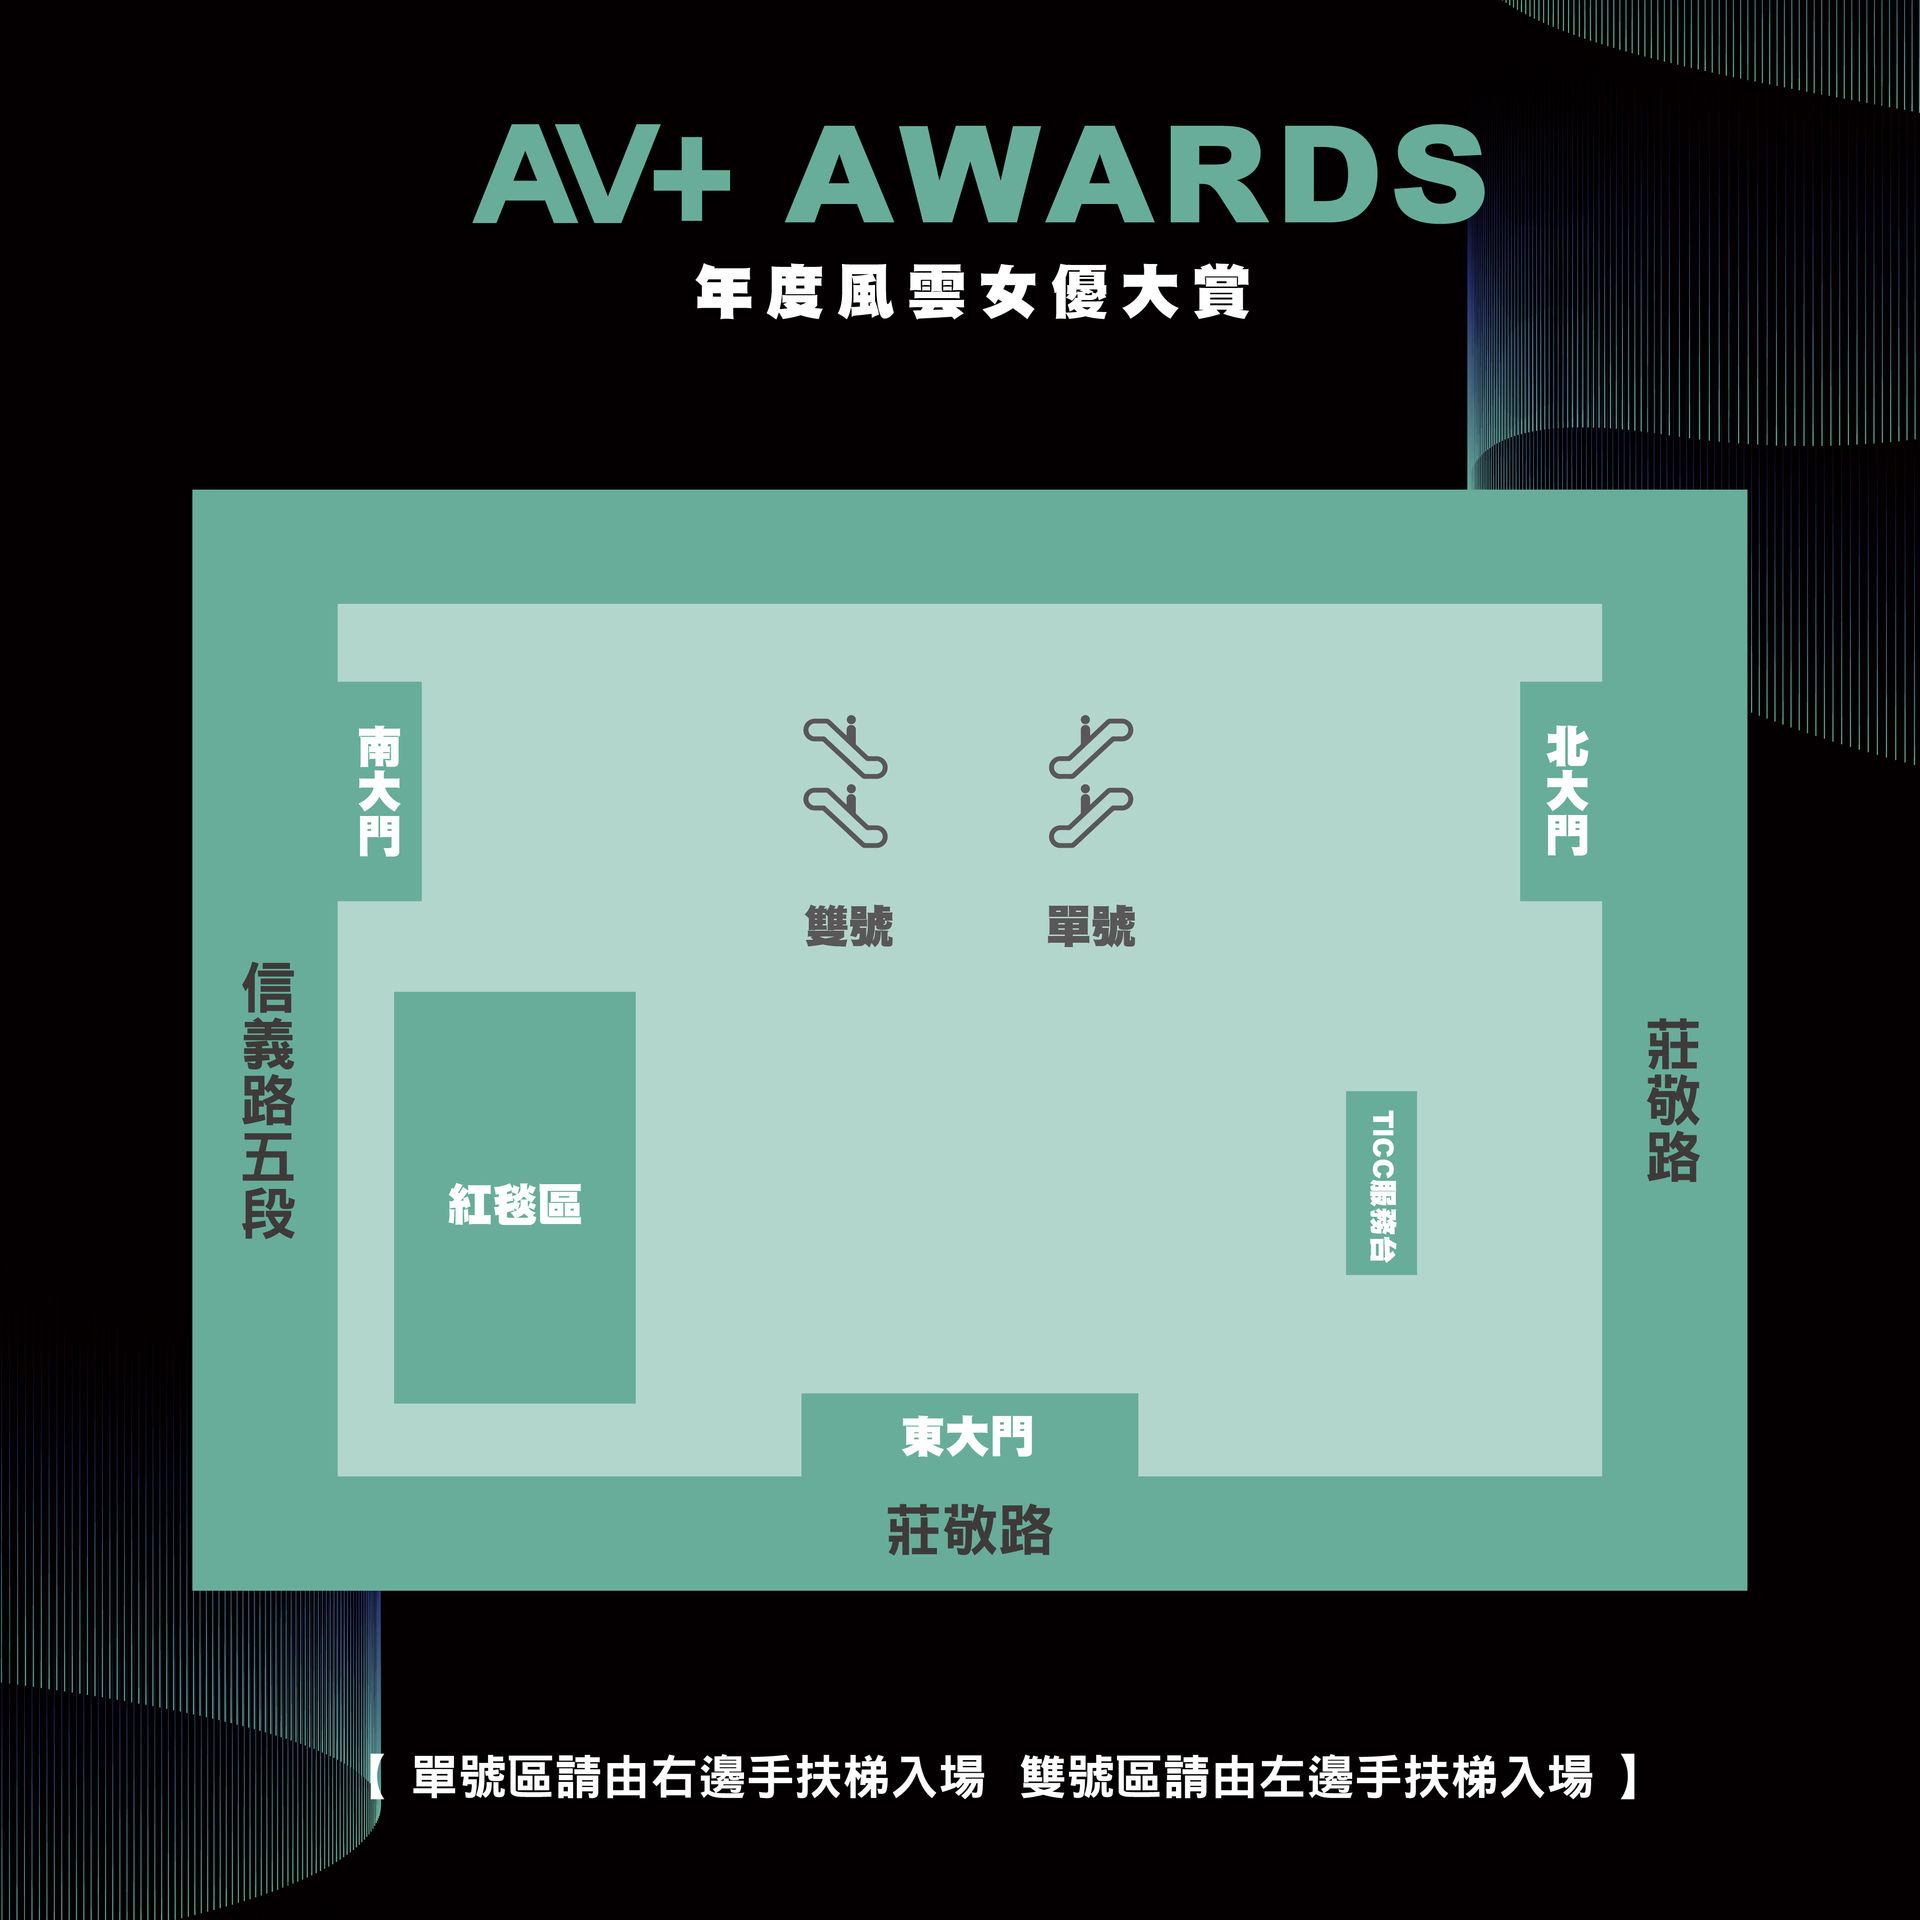 AV+ AWARDS 年度風雲女優大賞 的詳細資訊圖片